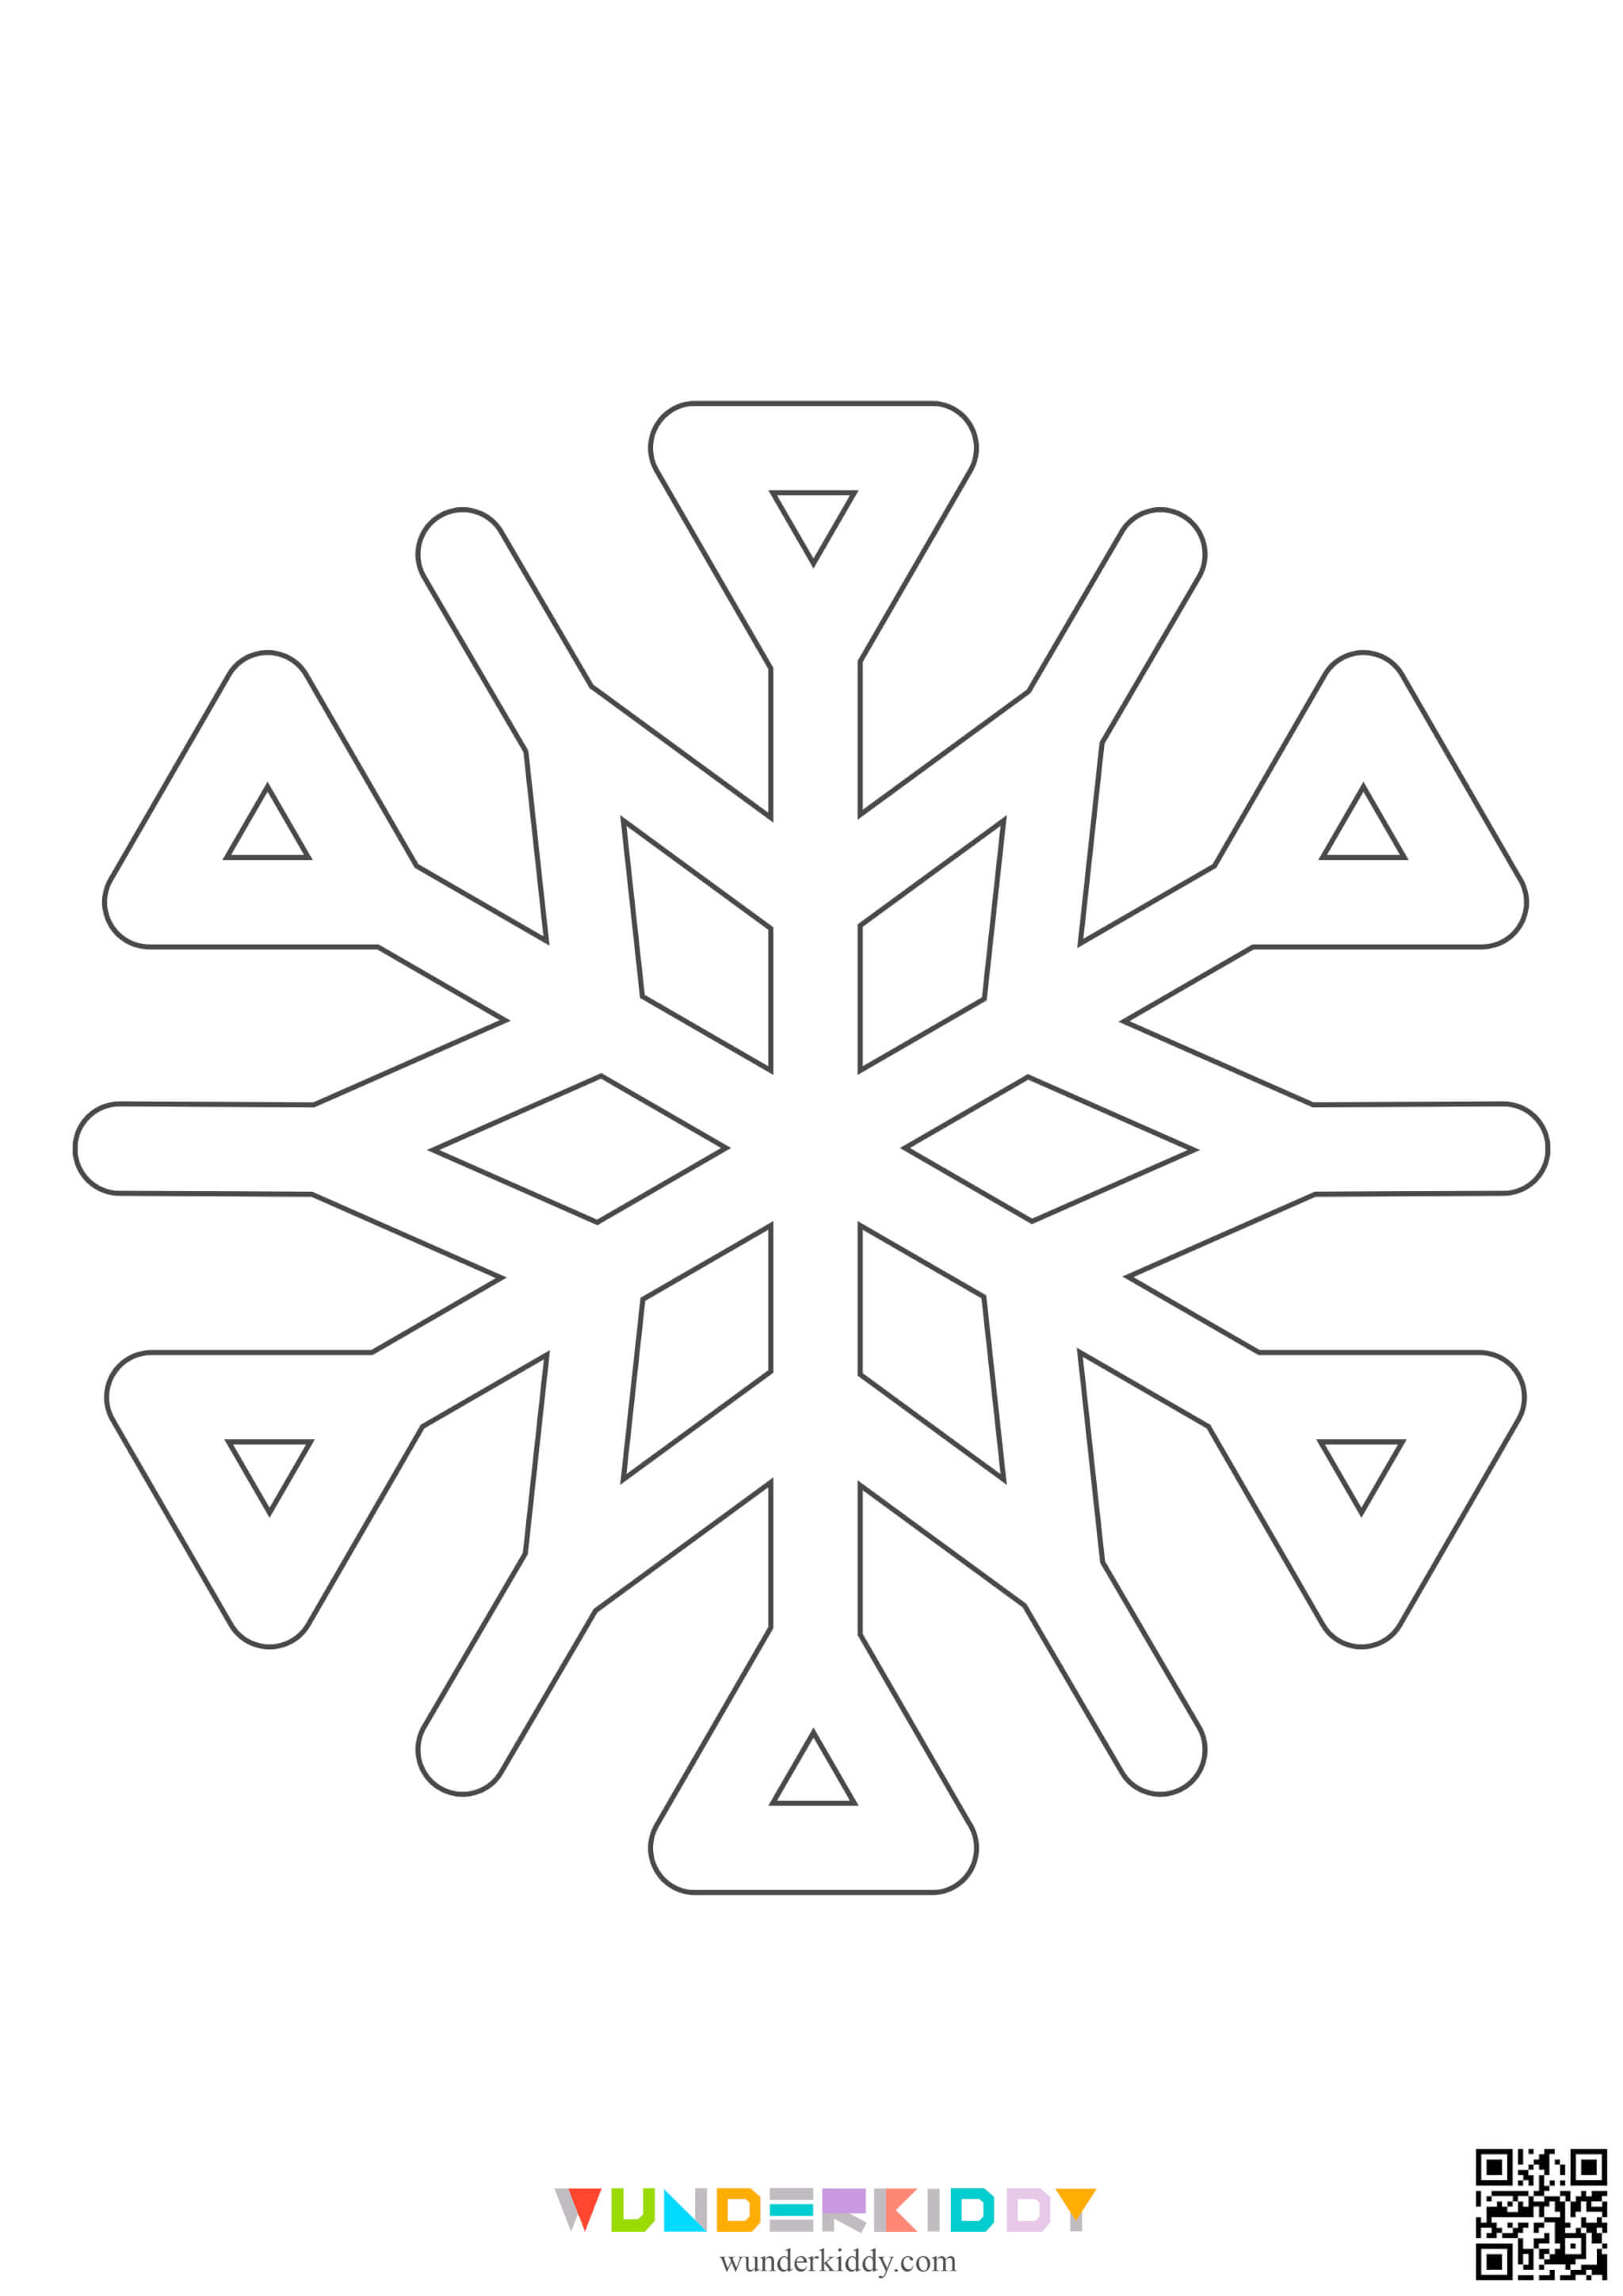 Snowflake Stencil Patterns - Image 6